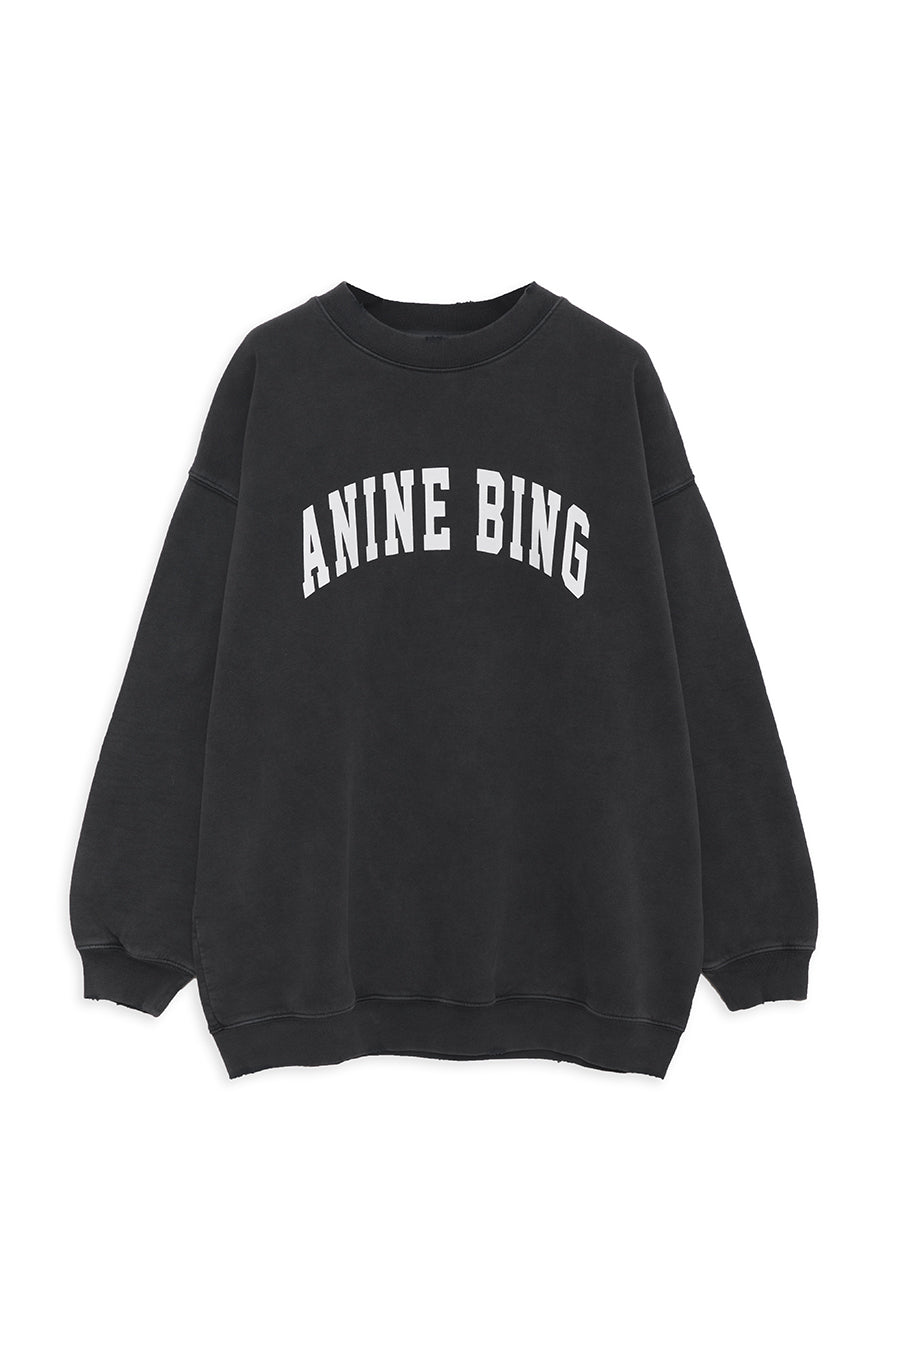 Anine Bing - Tyler Sweatshirt in Washed Black